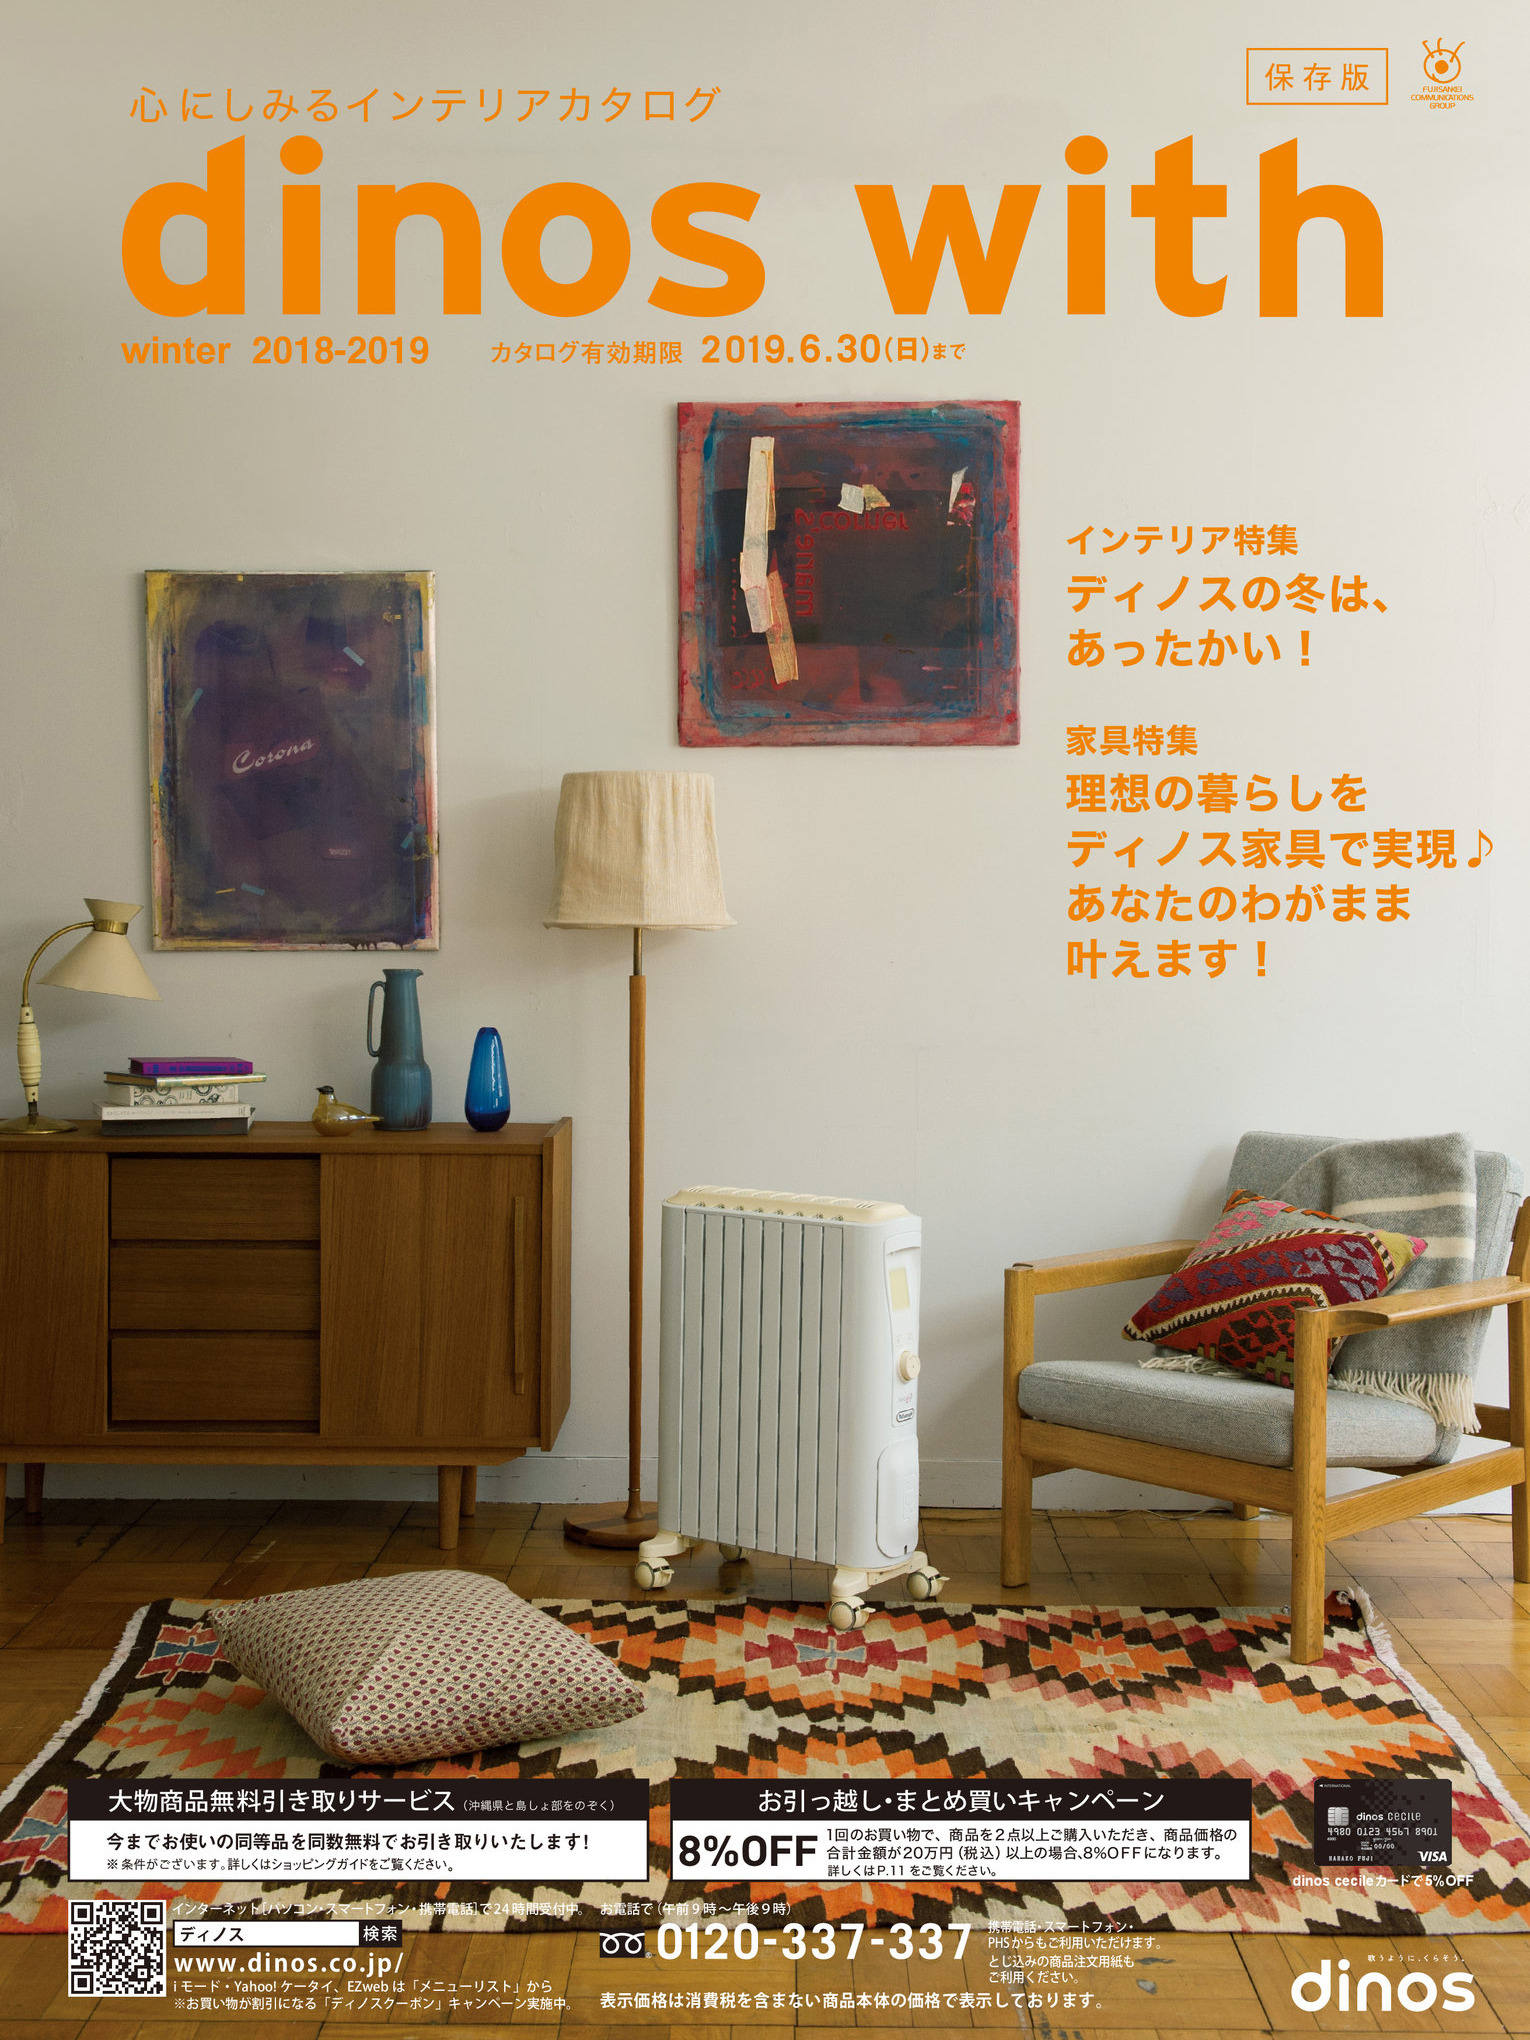 《Dinos With》日本版时尚布艺杂志2018年冬号